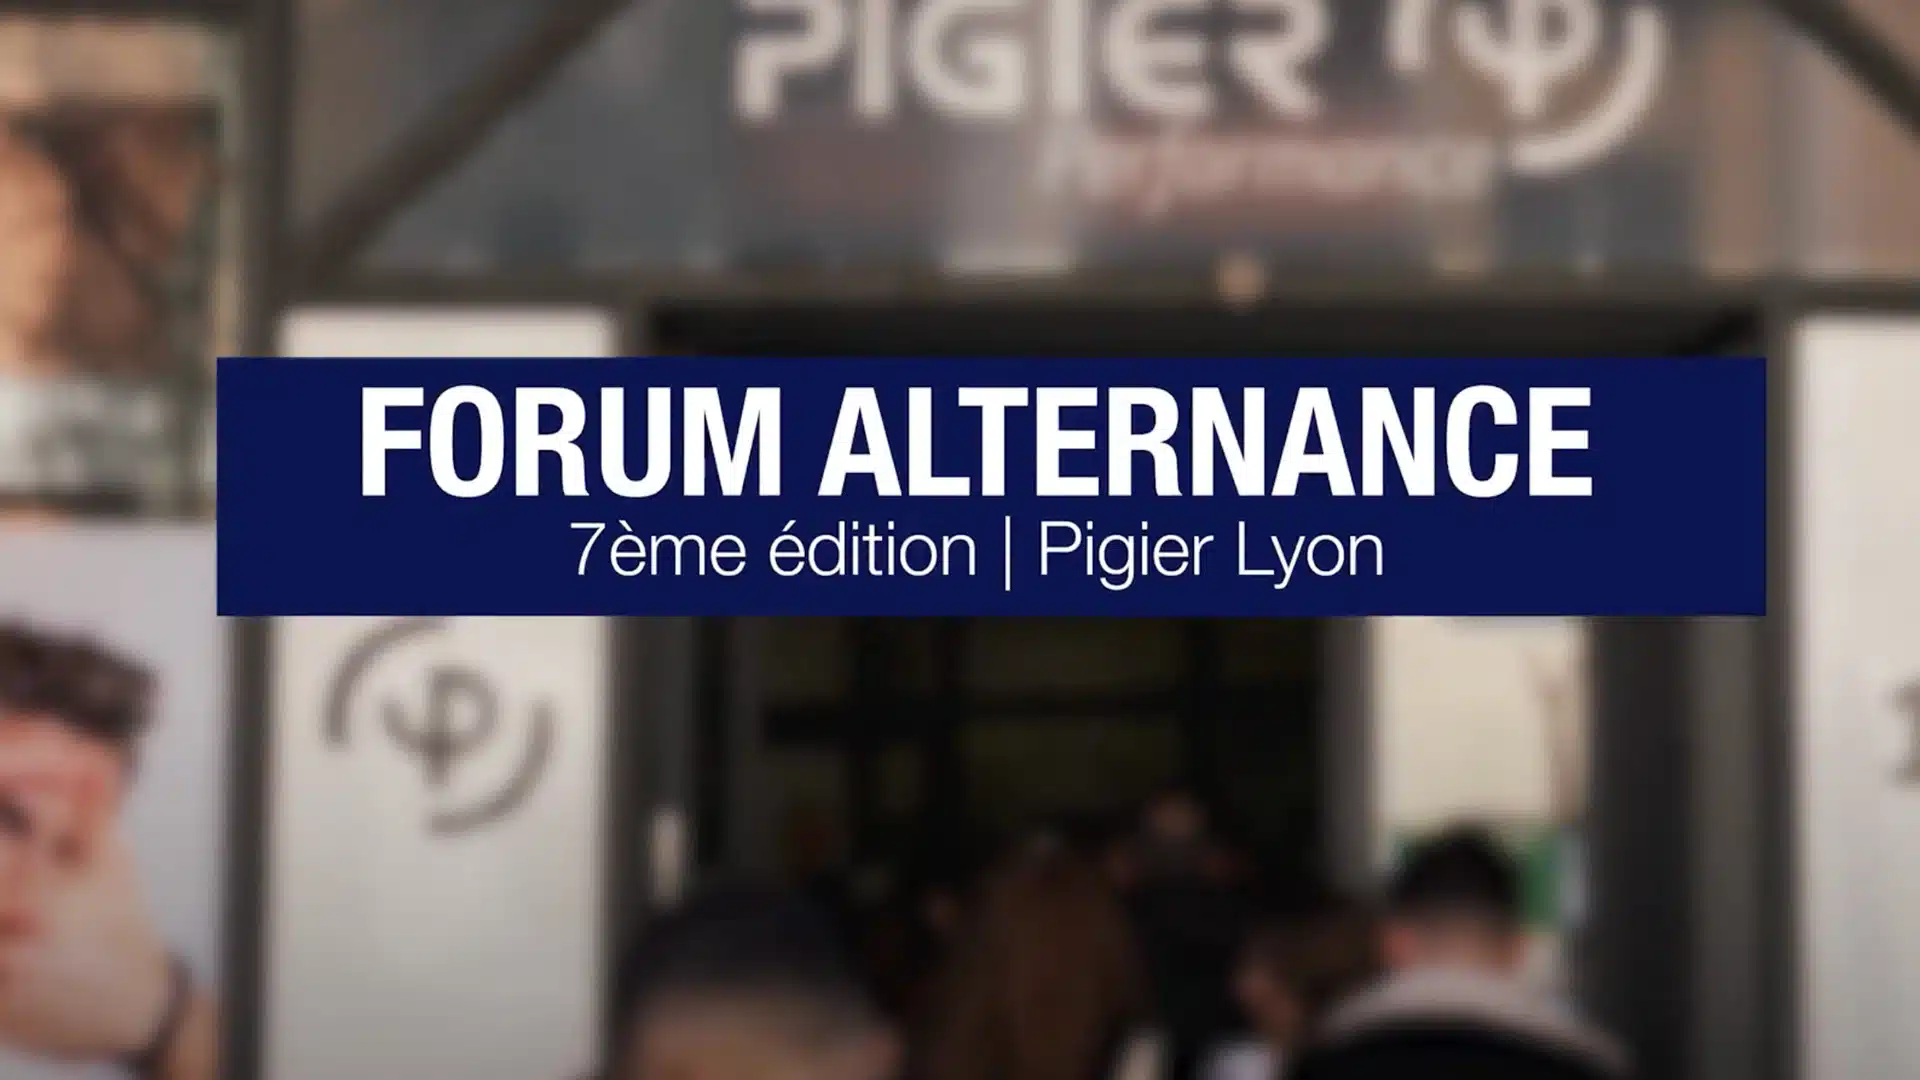 forum-alternance-pigier-lyon